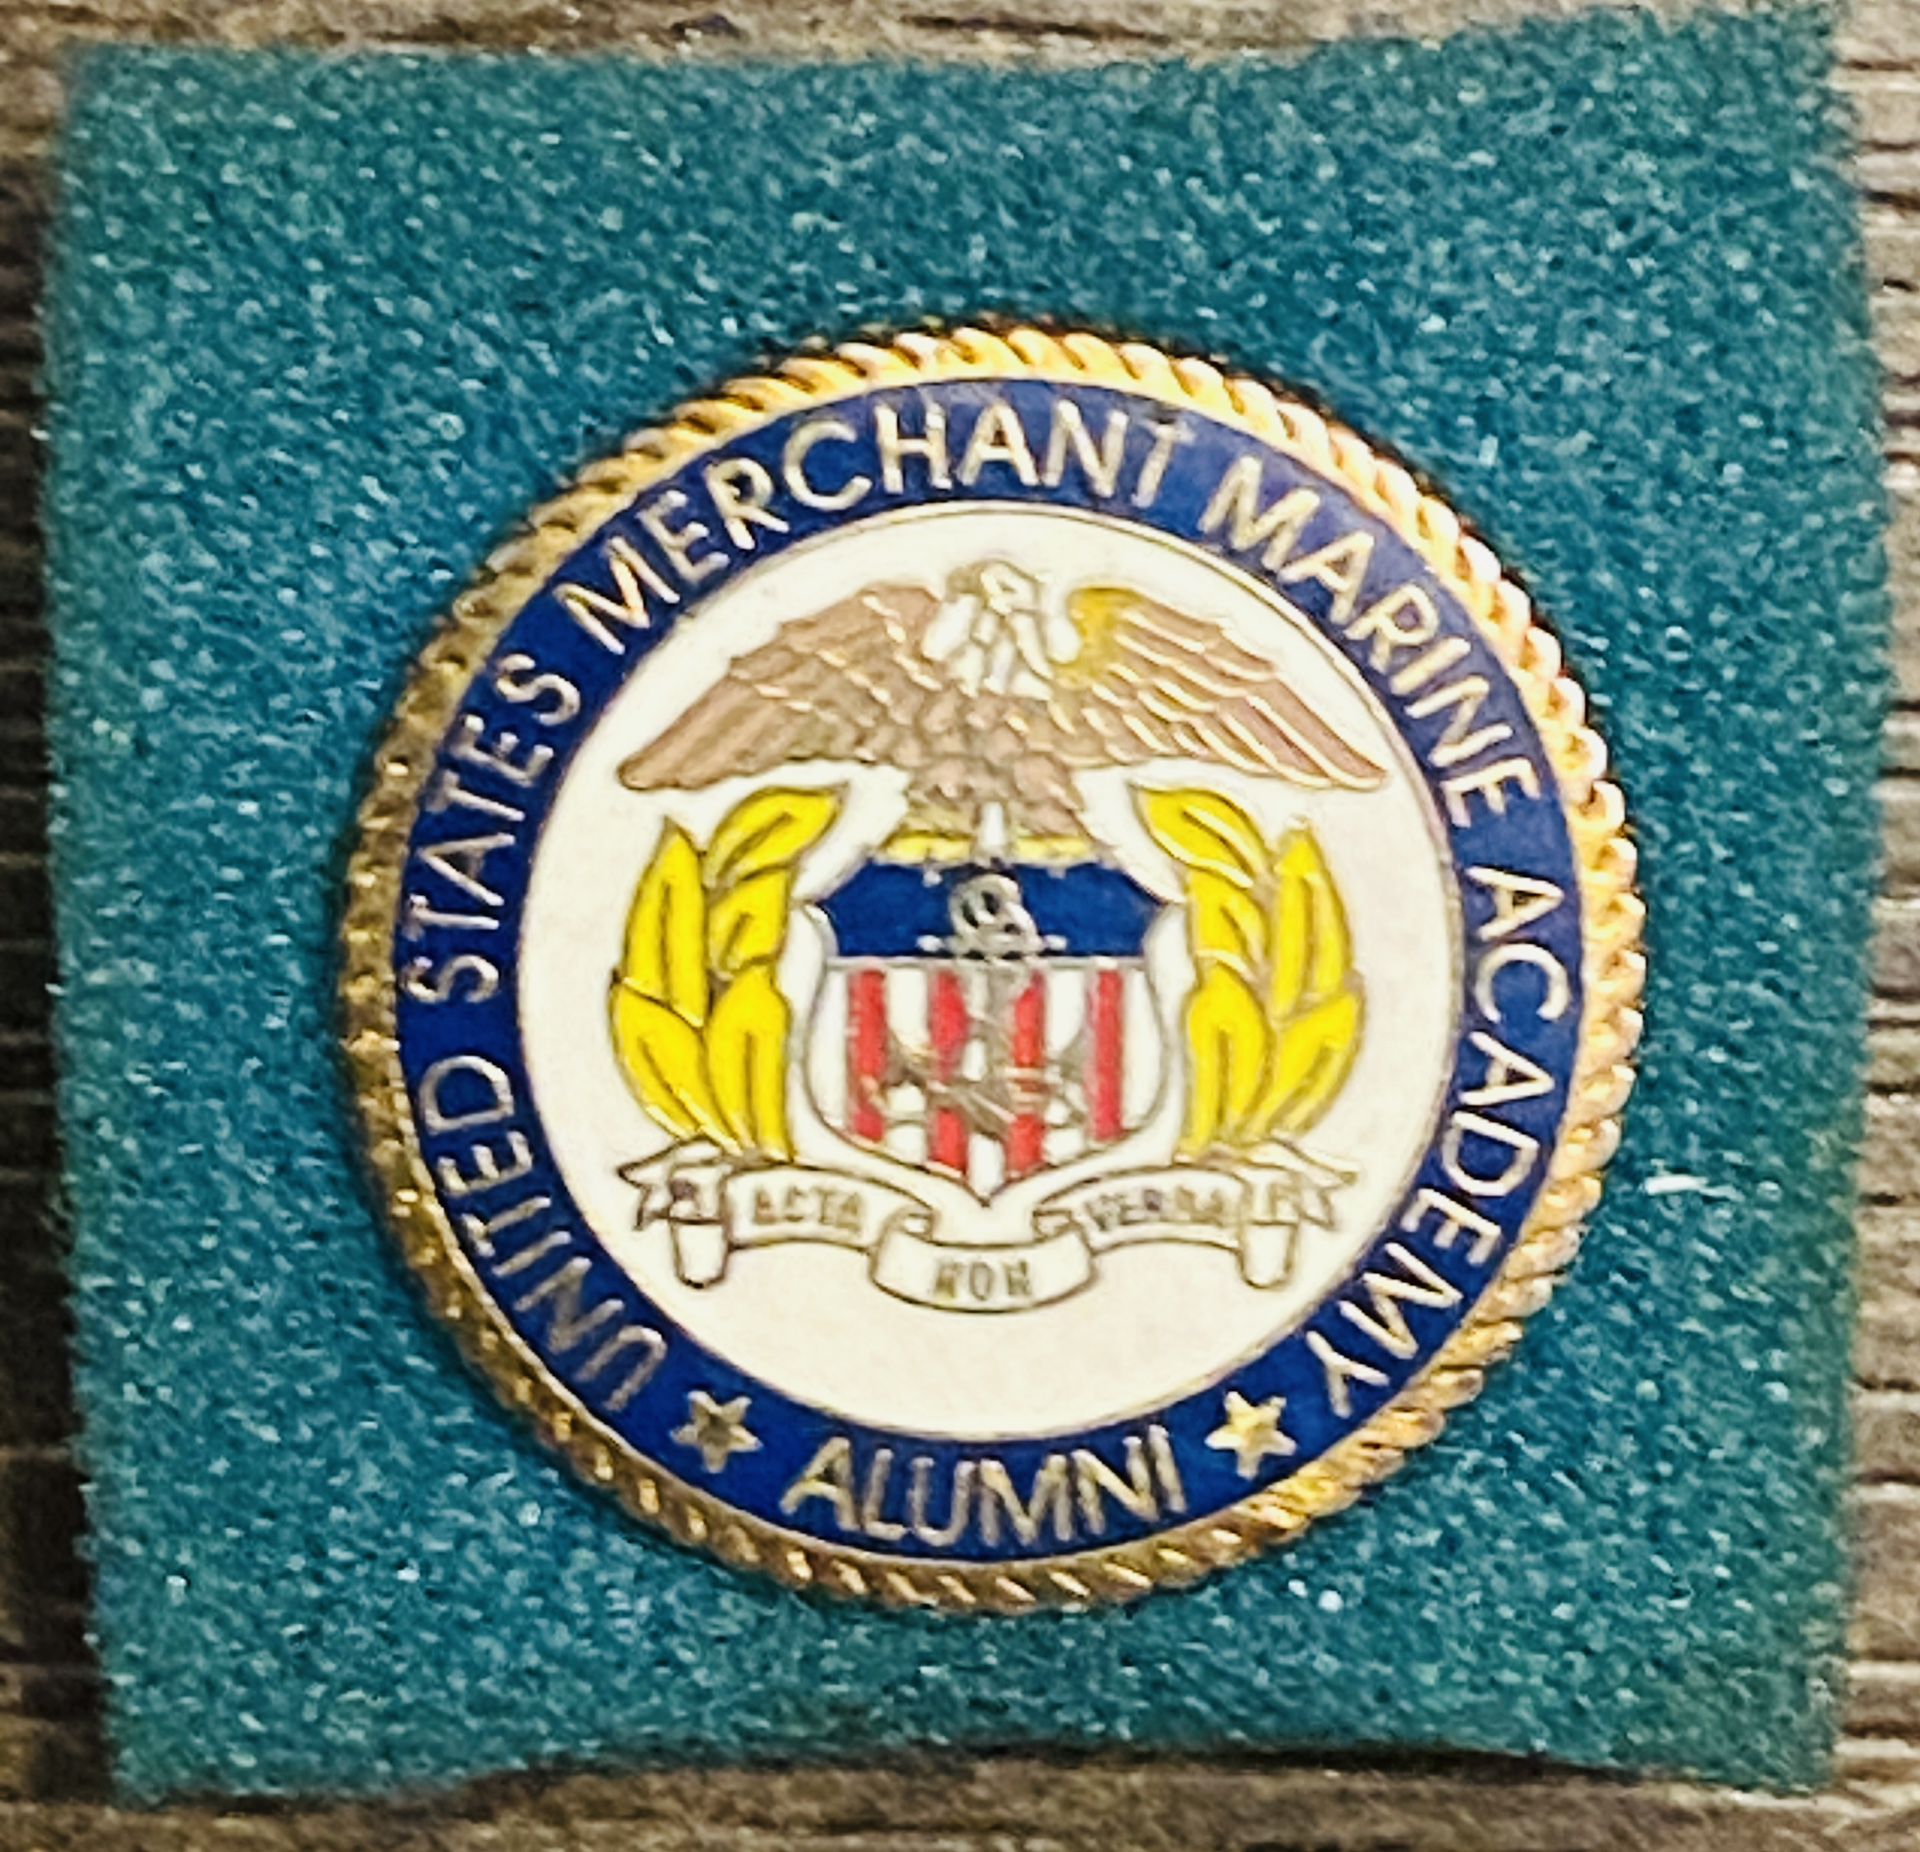 Unitedw States Merchant Marine Academy Alumni Pin